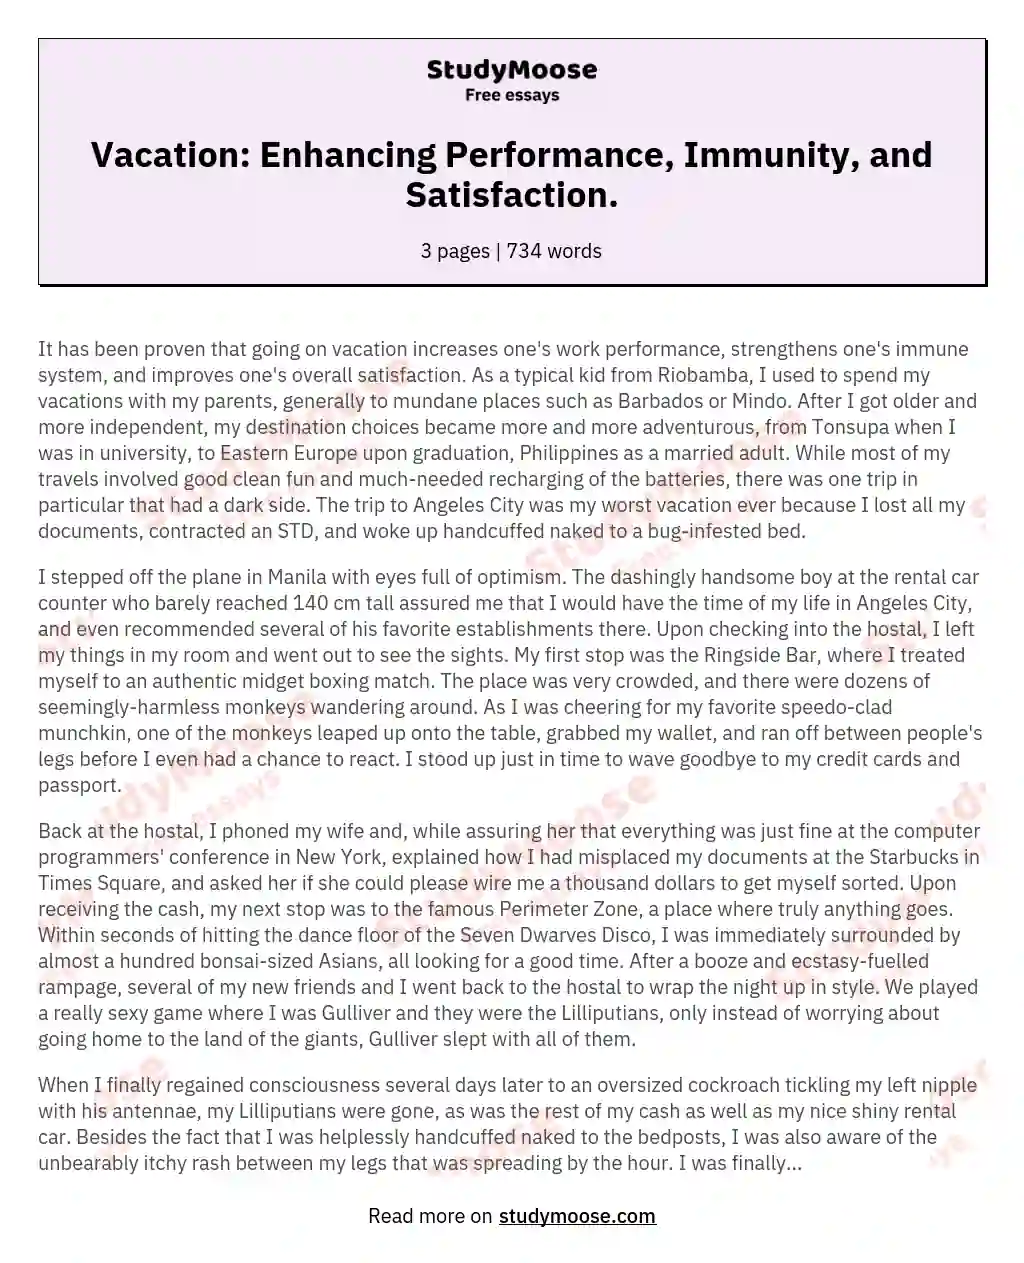 Vacation: Enhancing Performance, Immunity, and Satisfaction. essay